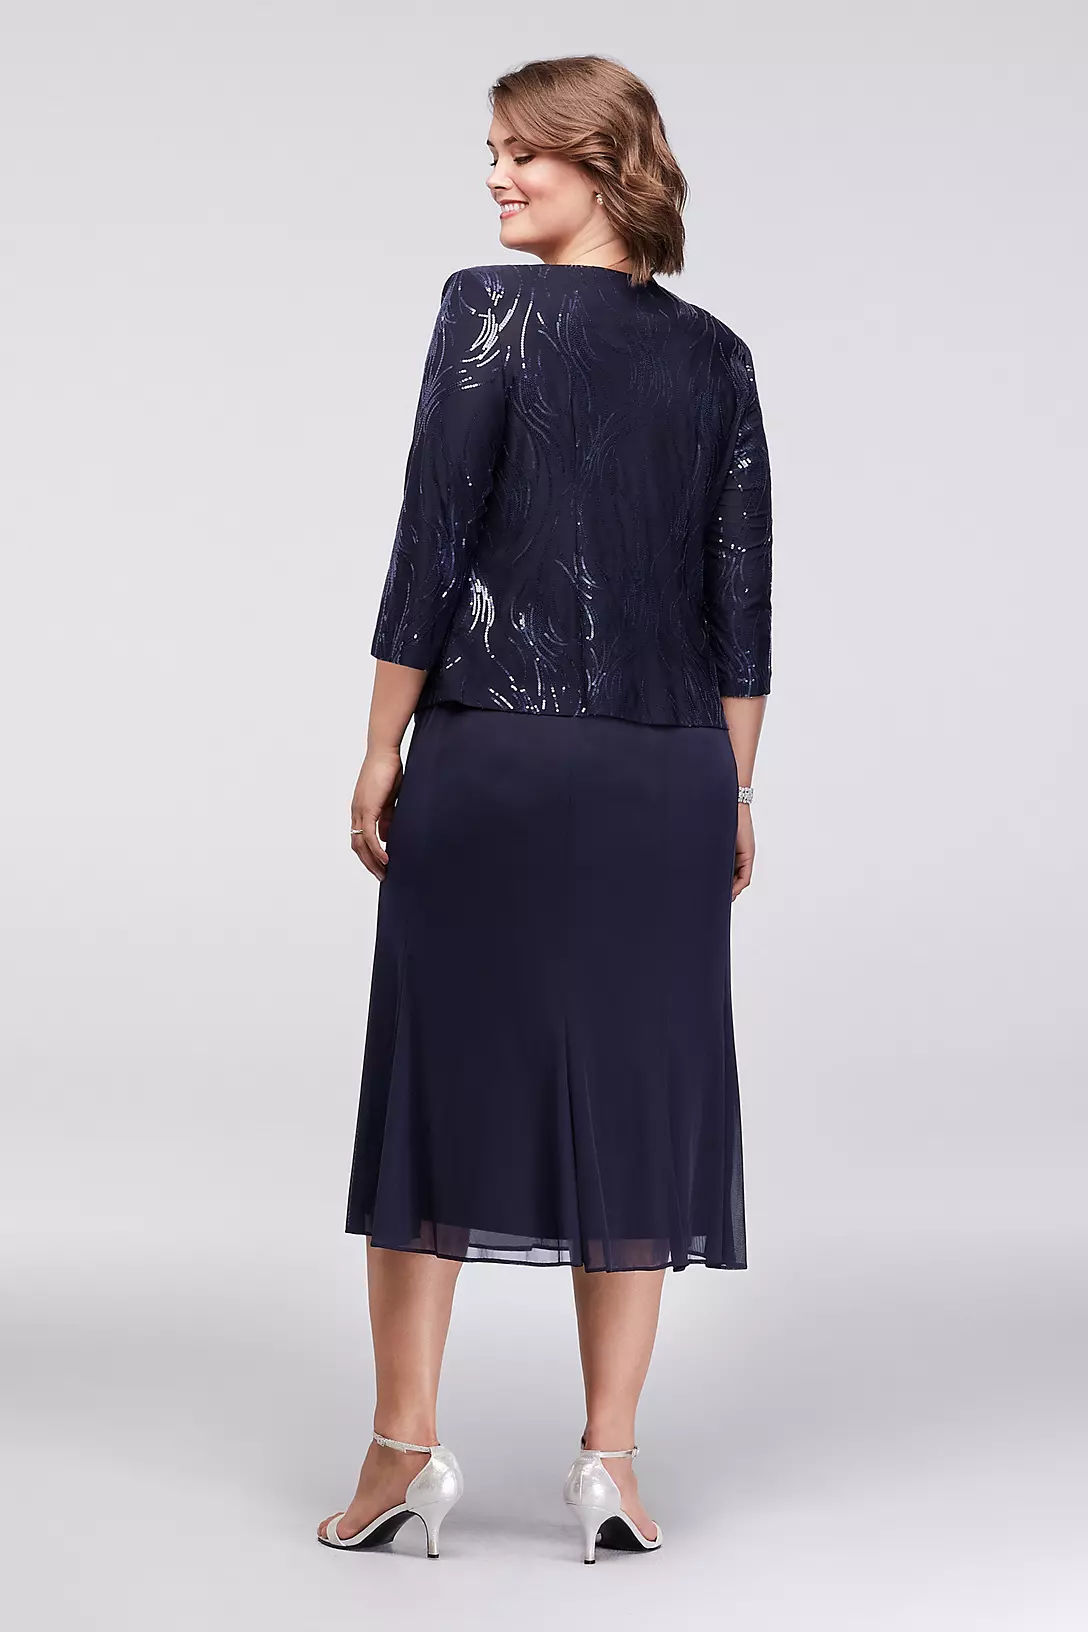 Sequined Tea-Length Plus Size Dress and Jacket Set Image 2